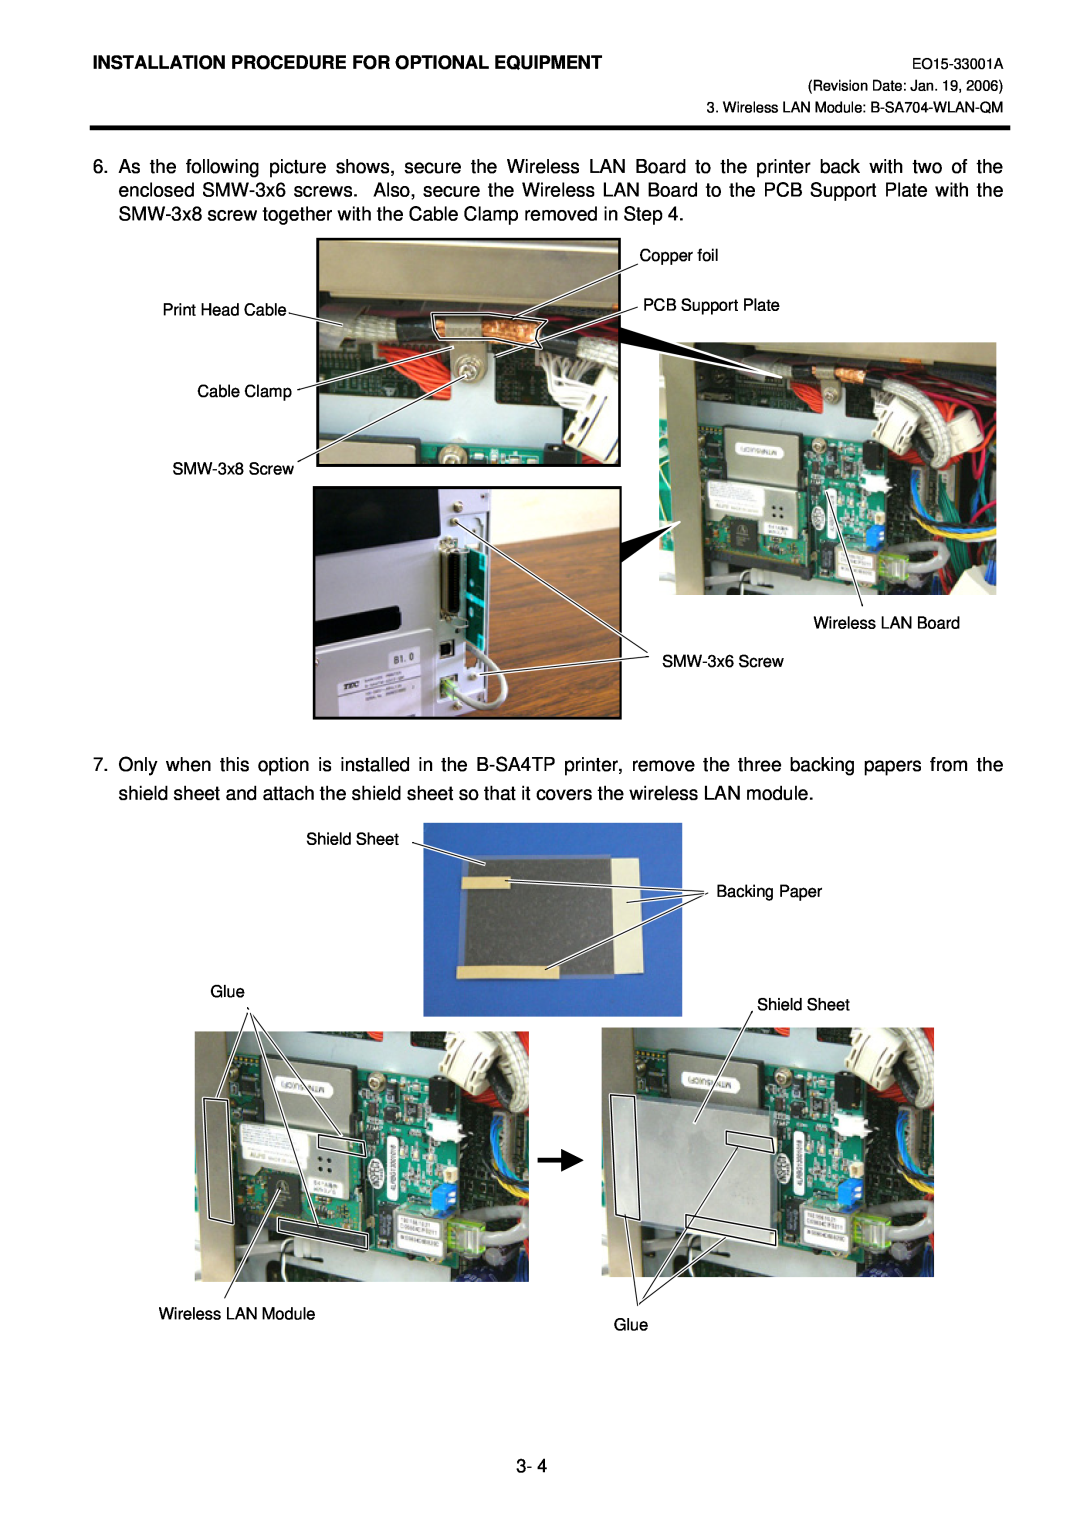 Toshiba B-SA4T Copper foil, Print Head Cable, Cable Clamp, SMW-3x8 Screw, Wireless LAN Board SMW-3x6 Screw 